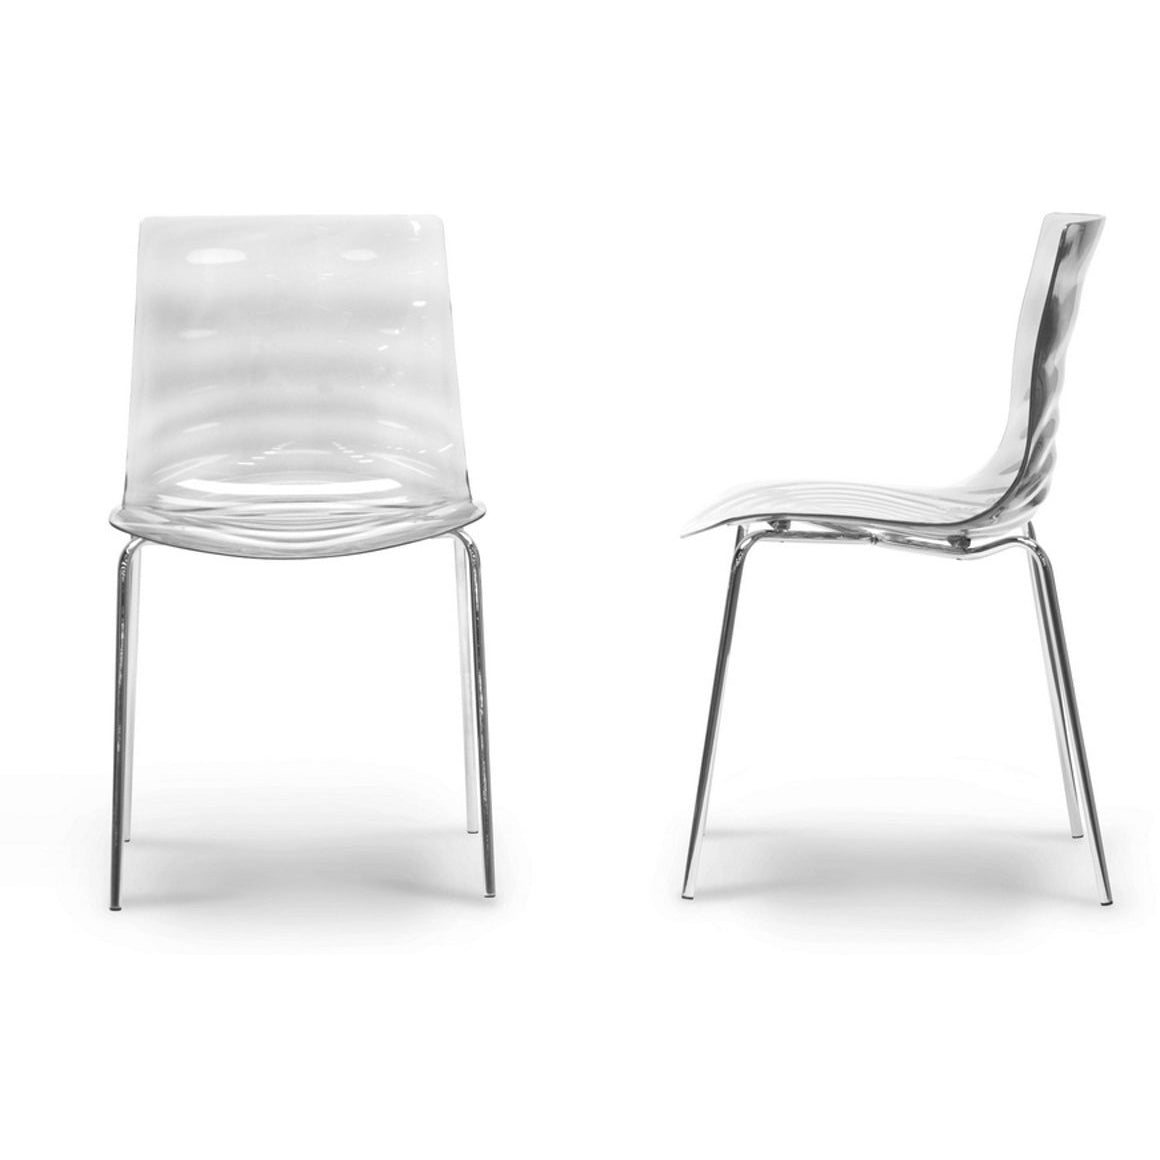 Baxton Studio Marisse Clear Plastic Modern Dining Chair (Set of 2) Baxton Studio-dining chair-Minimal And Modern - 2